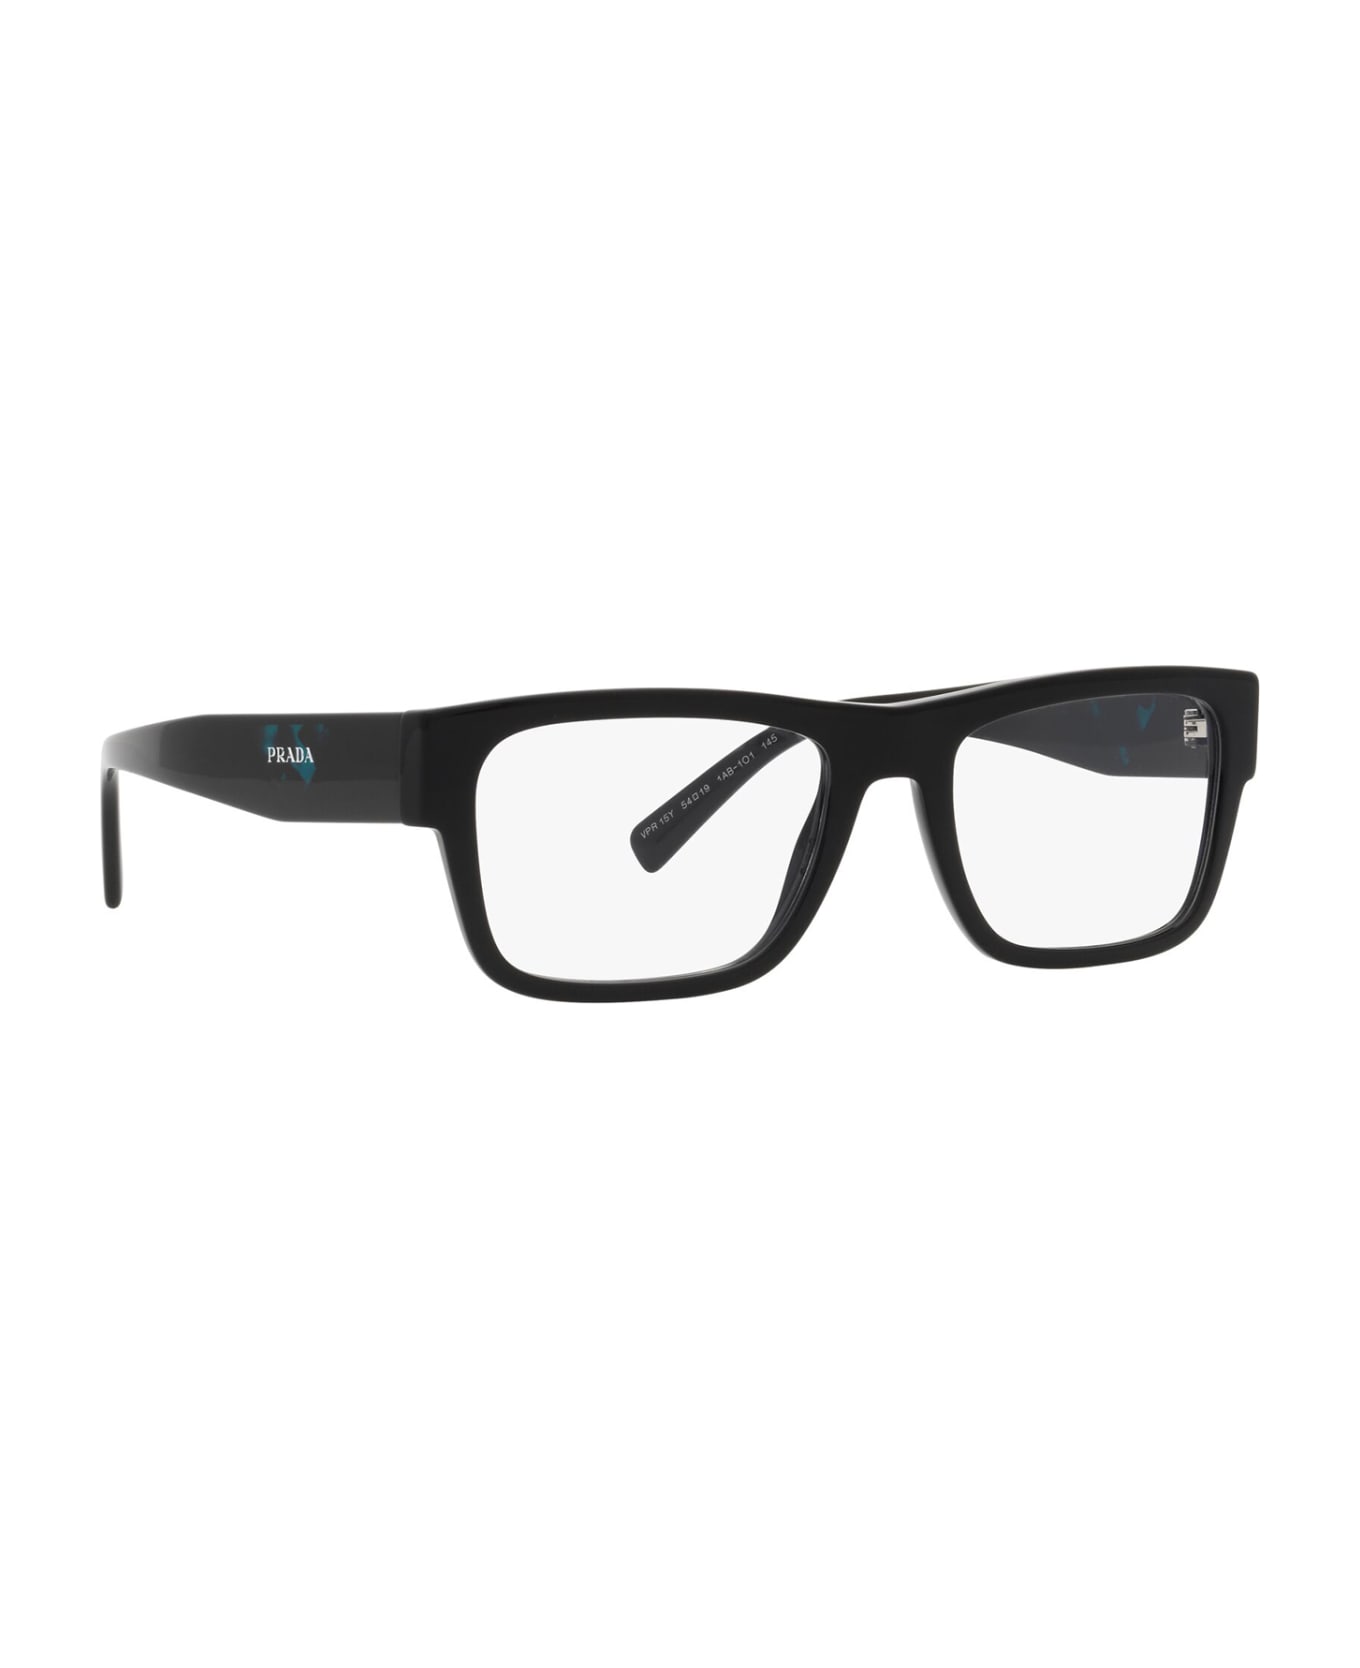 Prada Eyewear Pr 15yv Black Glasses - Black